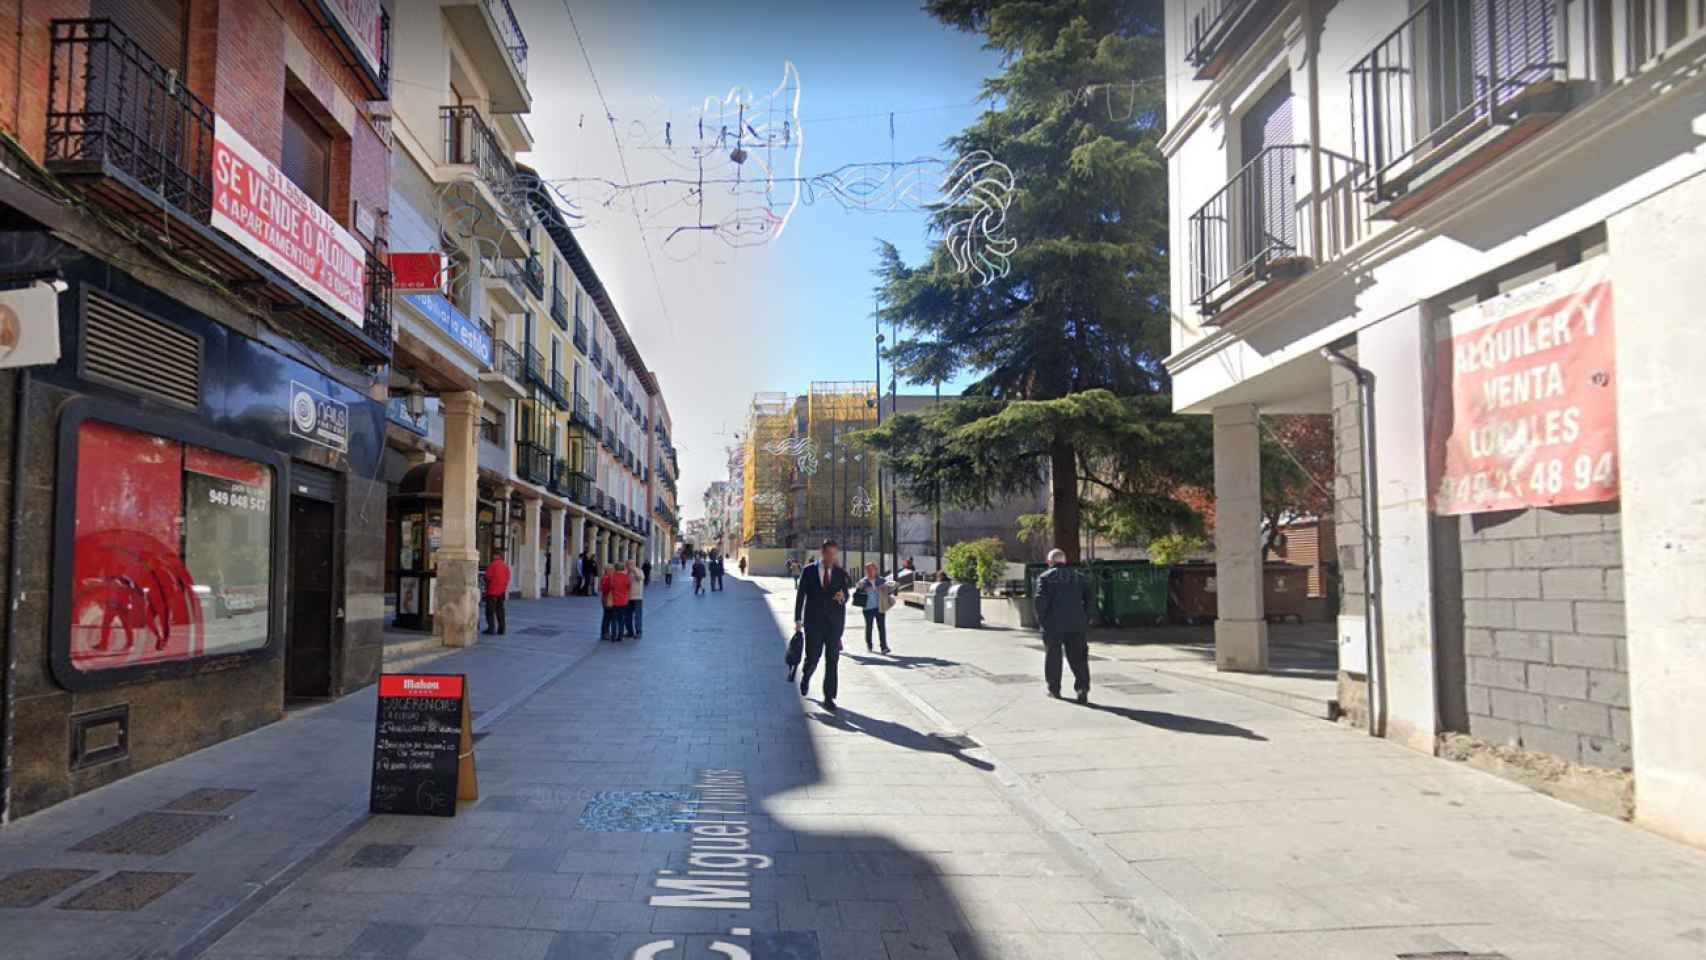 Entrada a la Plaza Mayor de Guadalajara. Foto: Google Maps.